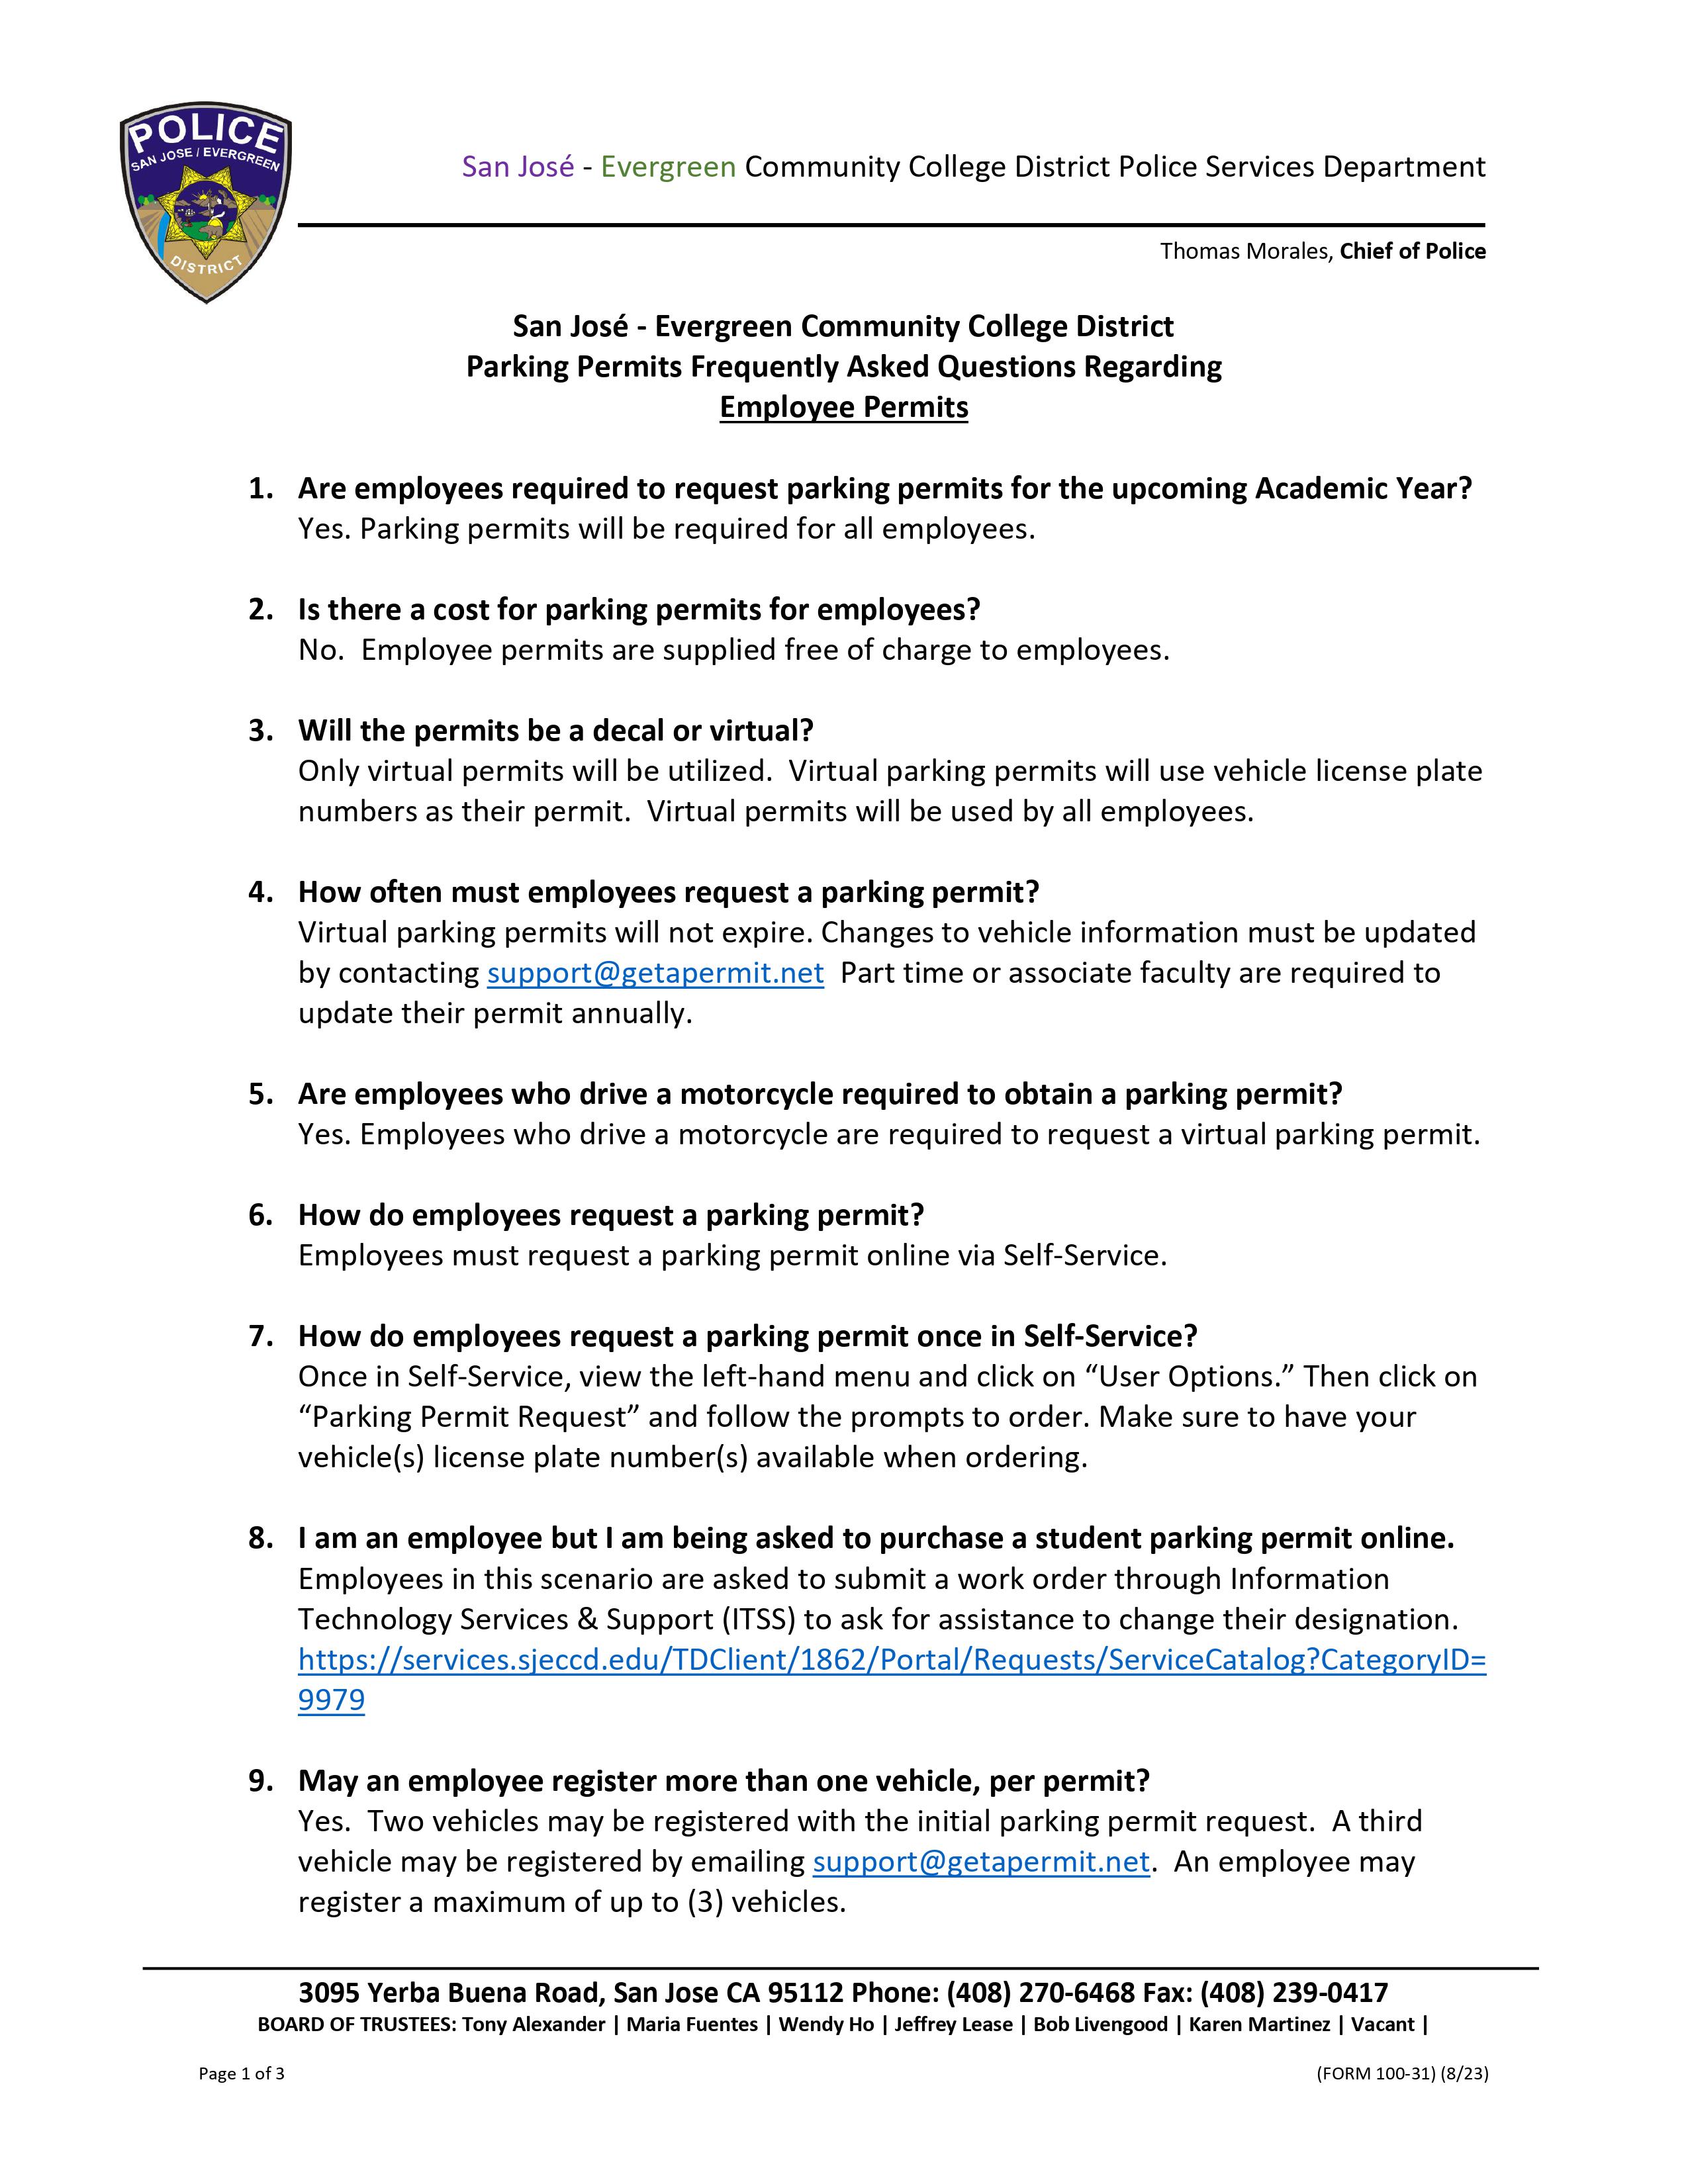 Employee Permit FAQ Screenshot of PDF page 1 of 3